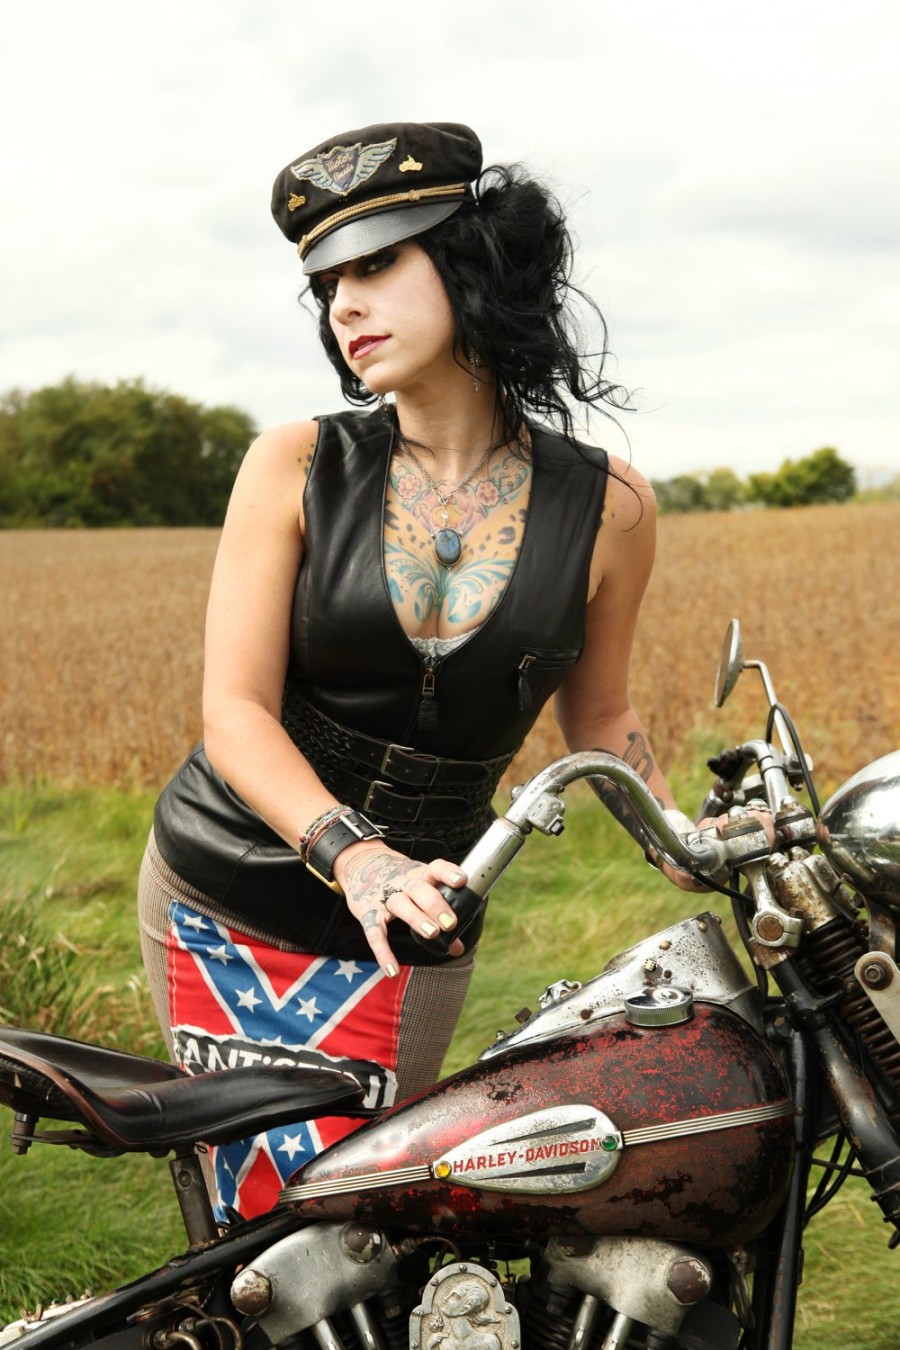 Danielle Colby Tattoo With Harley’s Bike